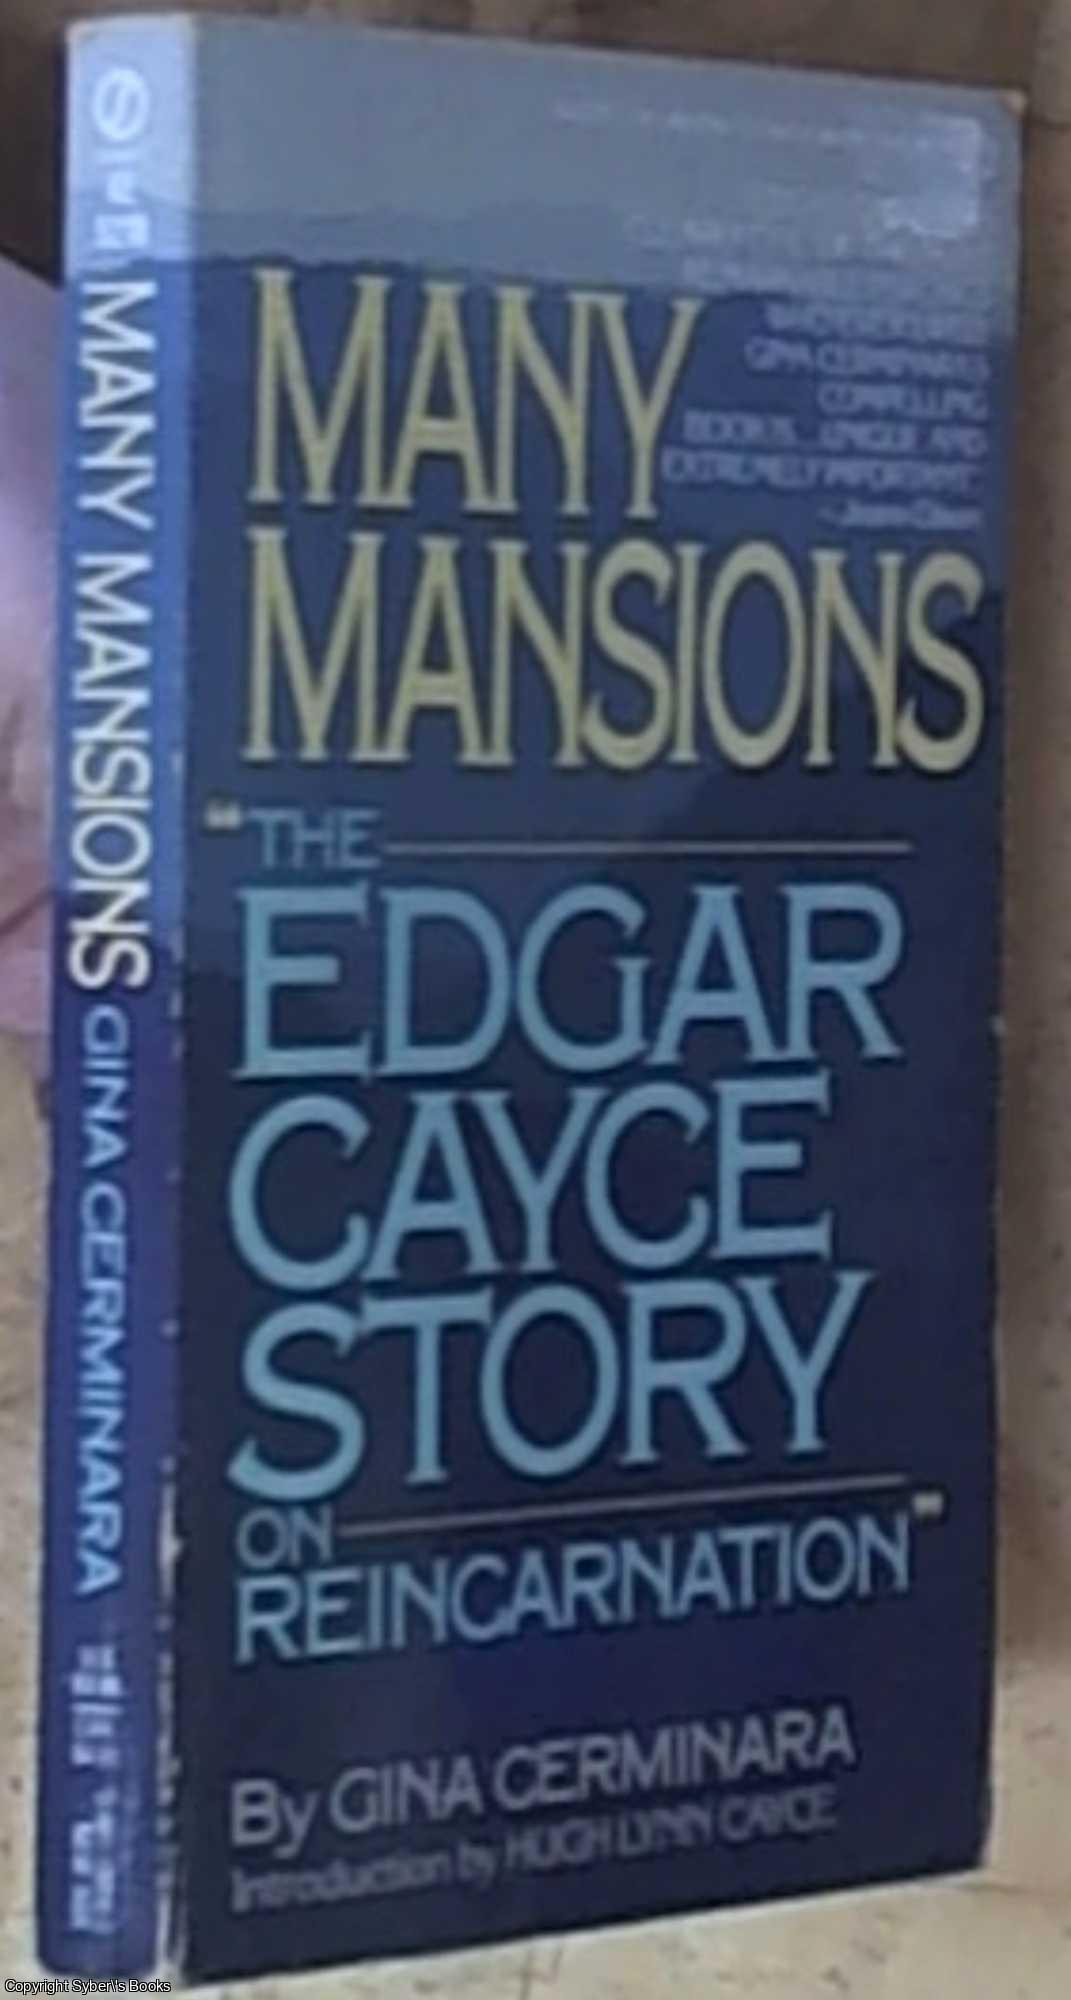 Cerminara, Gina - Many Mansions: The Edgar Cayce Story of Reincarnation